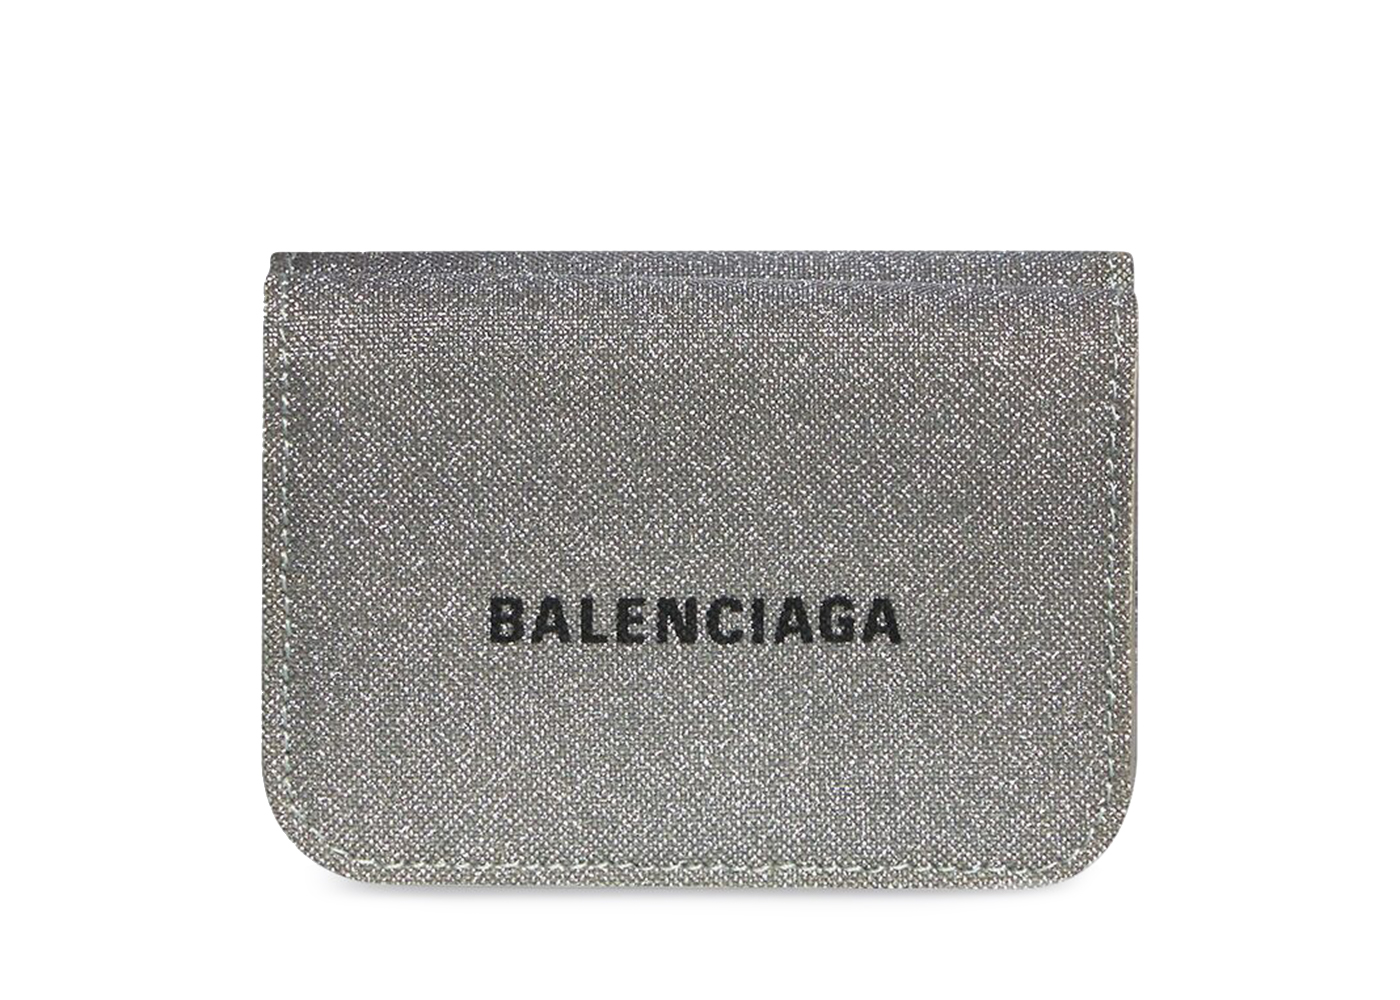 Balenciaga Mini Leather Cash Wallet  Harrods HR